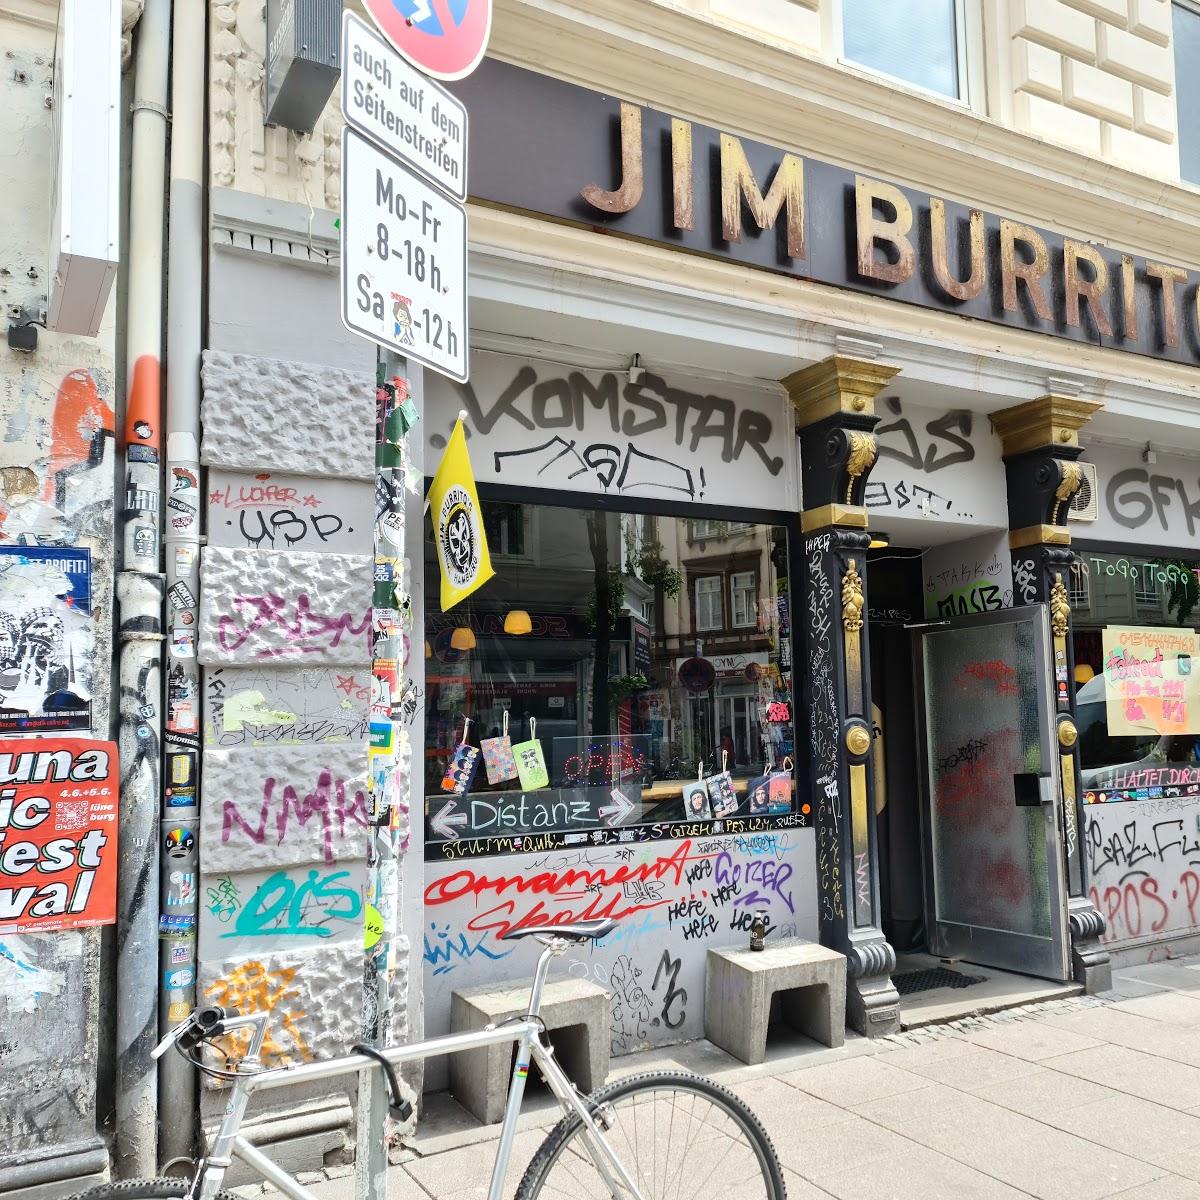 Restaurant "Jim Burrito